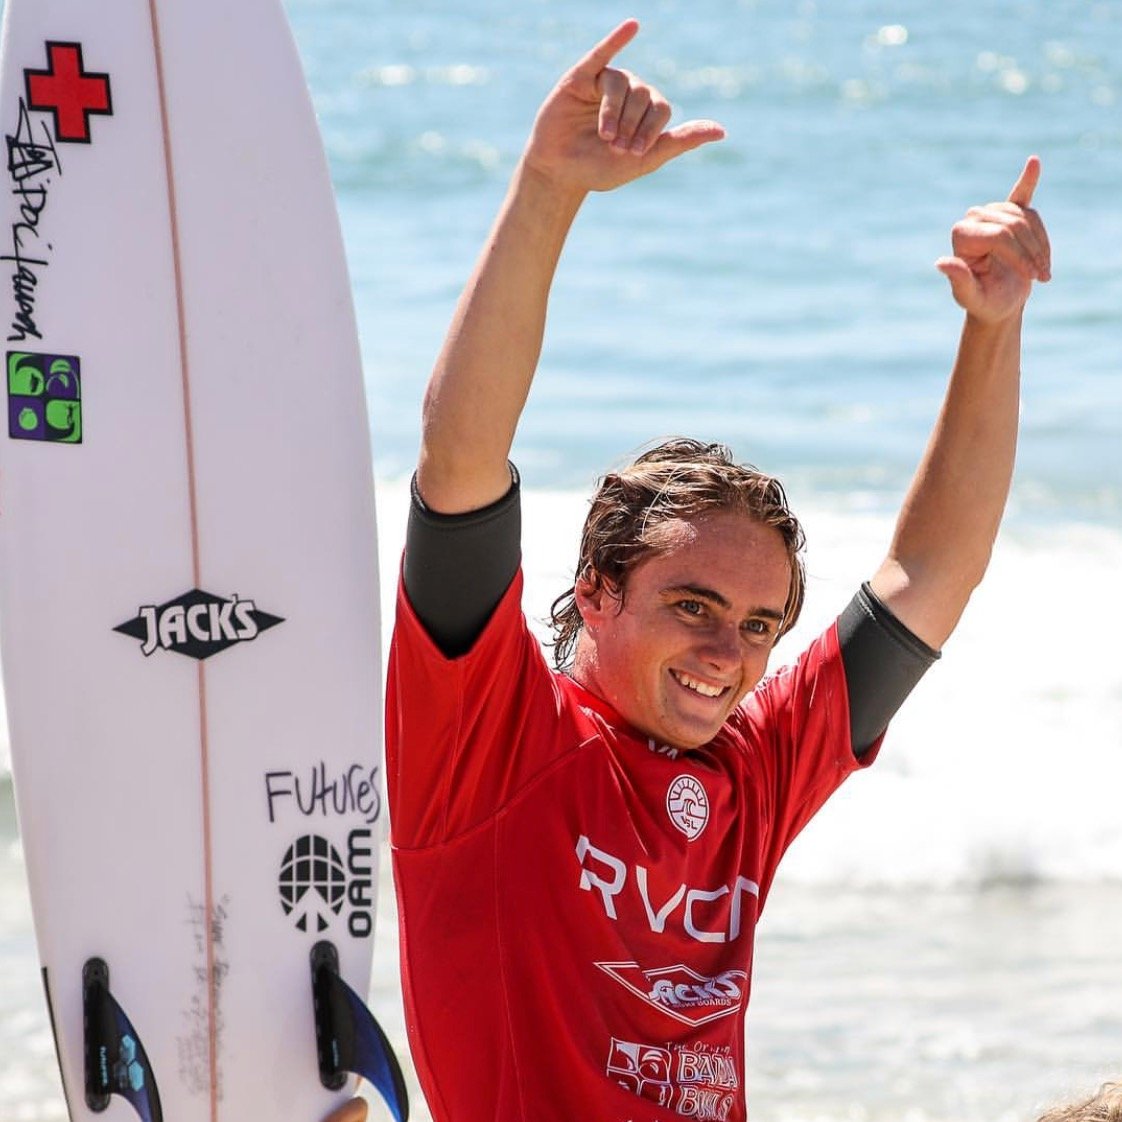 RVCA Pro JR / City of Newport Beach Surf Championship 2018 | Jack's Surfboards